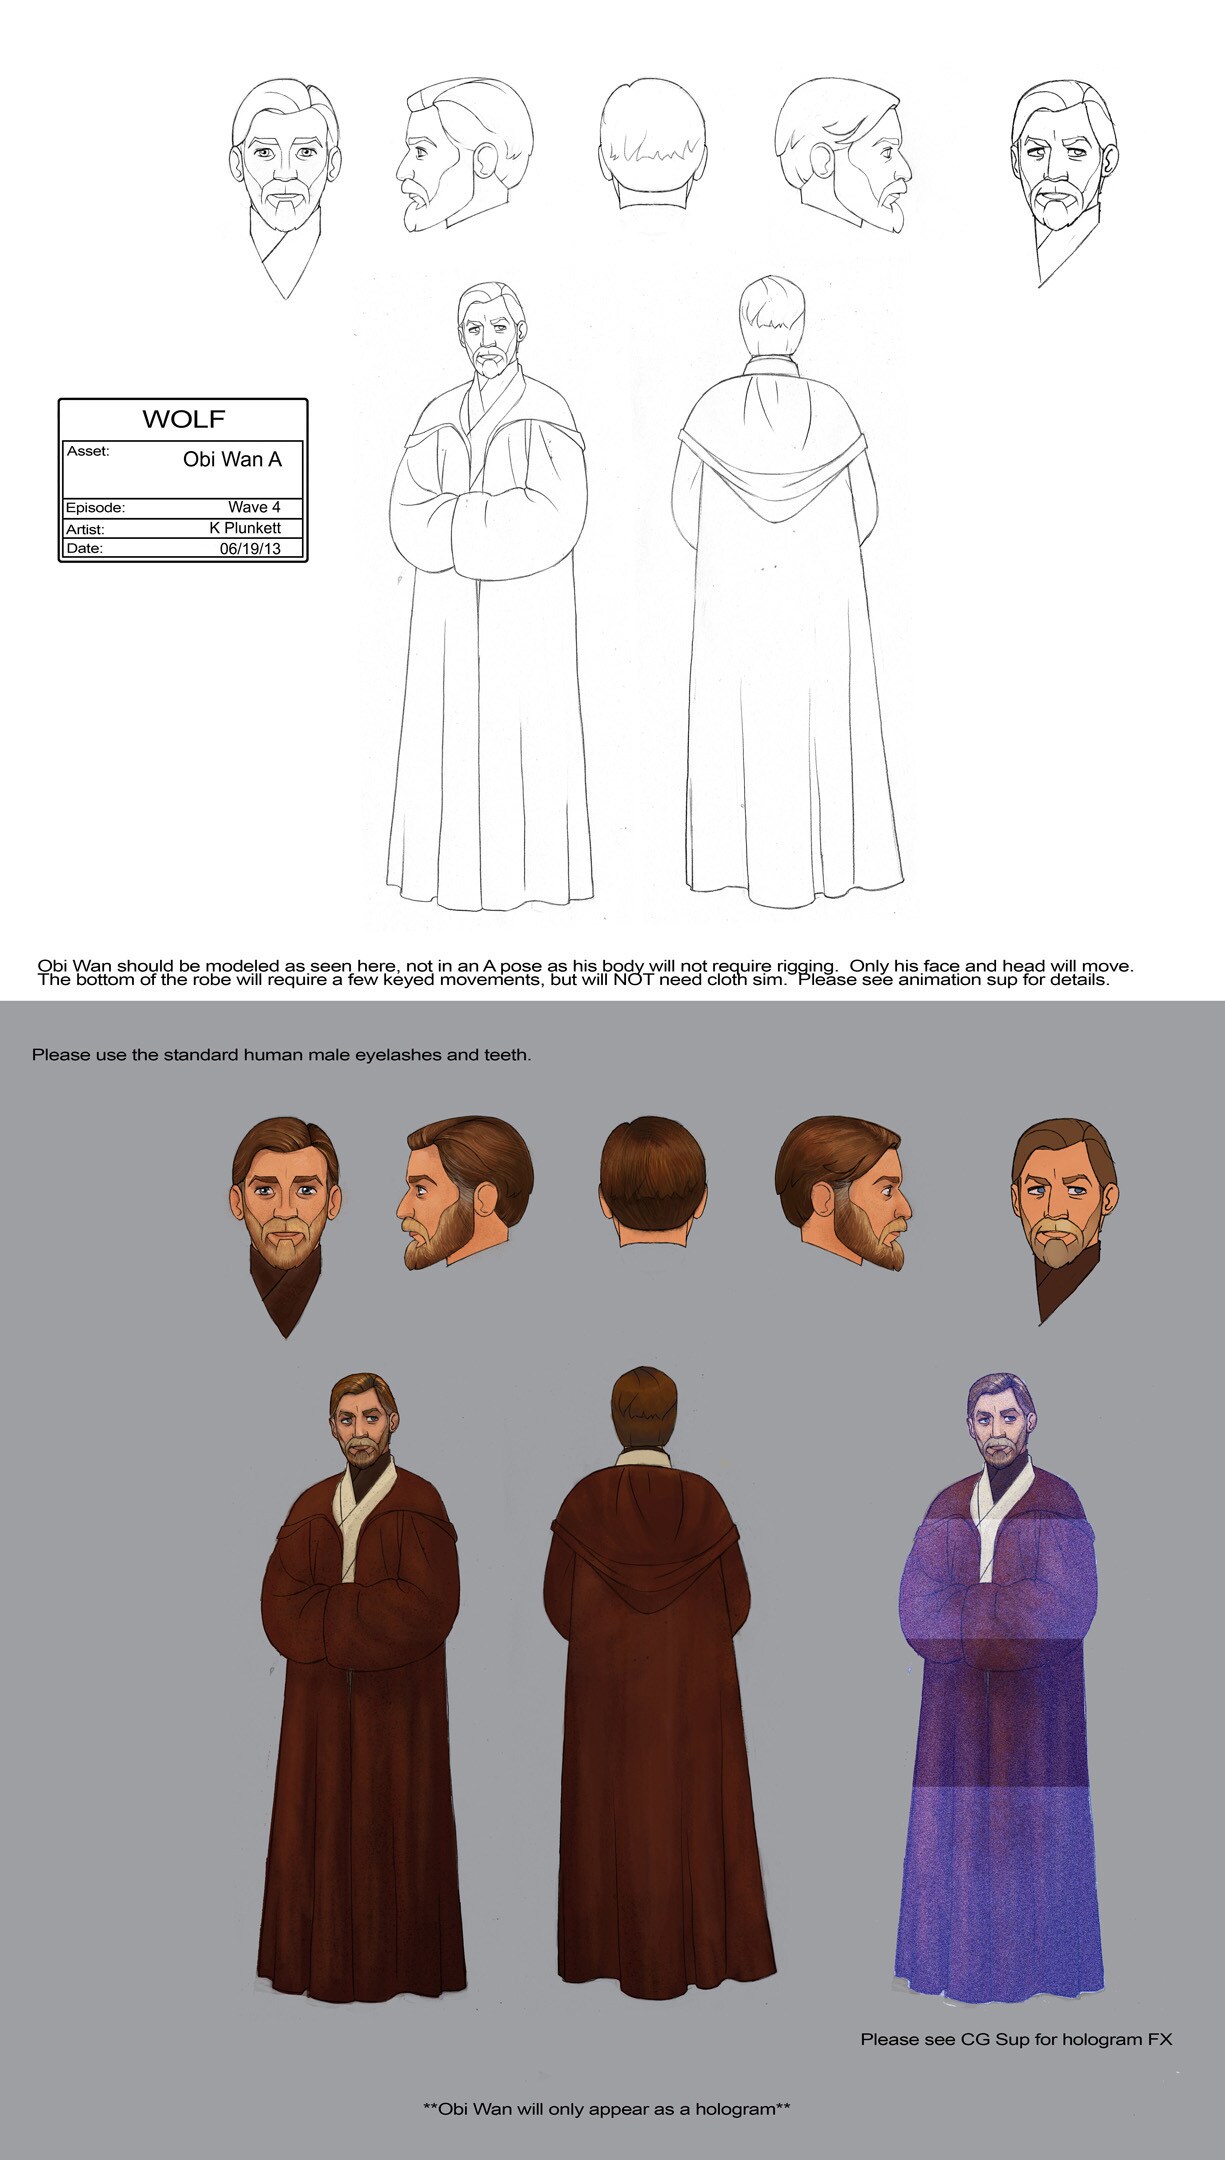 Obi-Wan Kenobi character design illustration, based on the Jedi's look from Star Wars: Episode II...